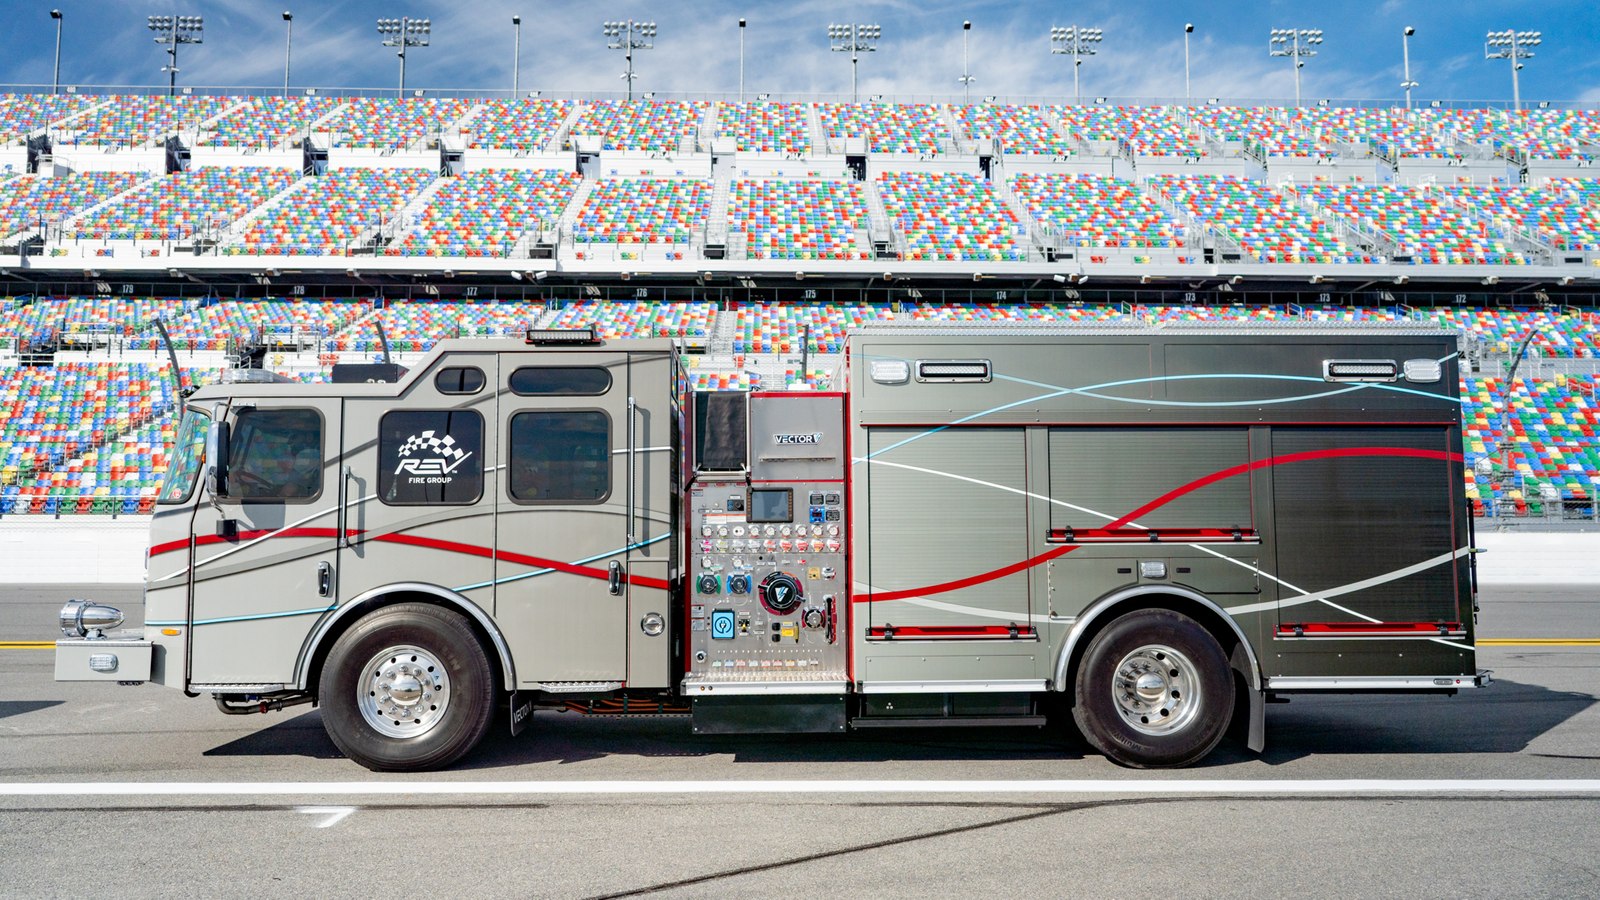 All-electric Vector fire truck to be part of fleet at Daytona International Speedway